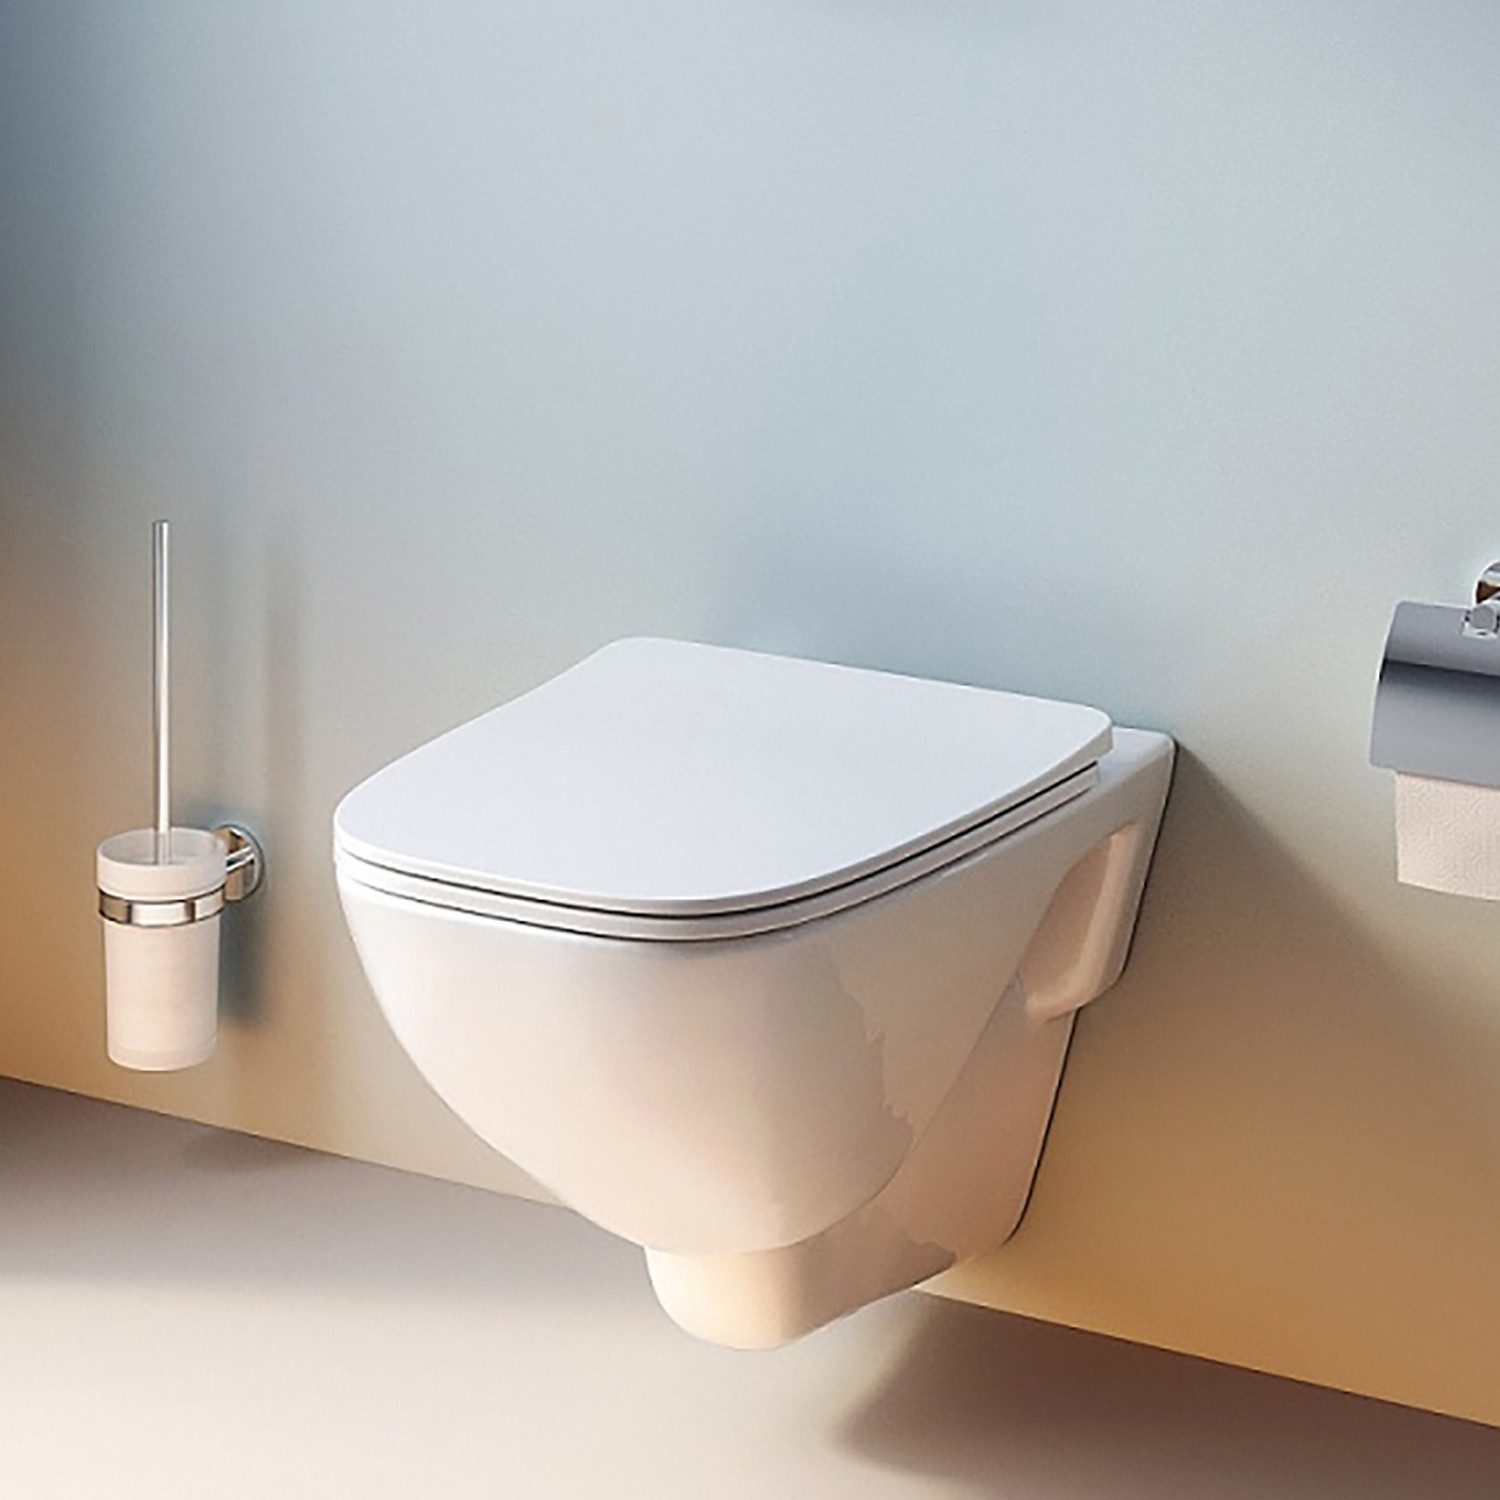 AM.PM Tiefspül-WC Wand WC X-Joy Hänge WC Spülrandloses Toilette aus Keramik Tiefspüler, wandhängend, Abgang waagerecht, Schnellverschluss-Sitz mit Soft-Close-Funktion, Flash Clean